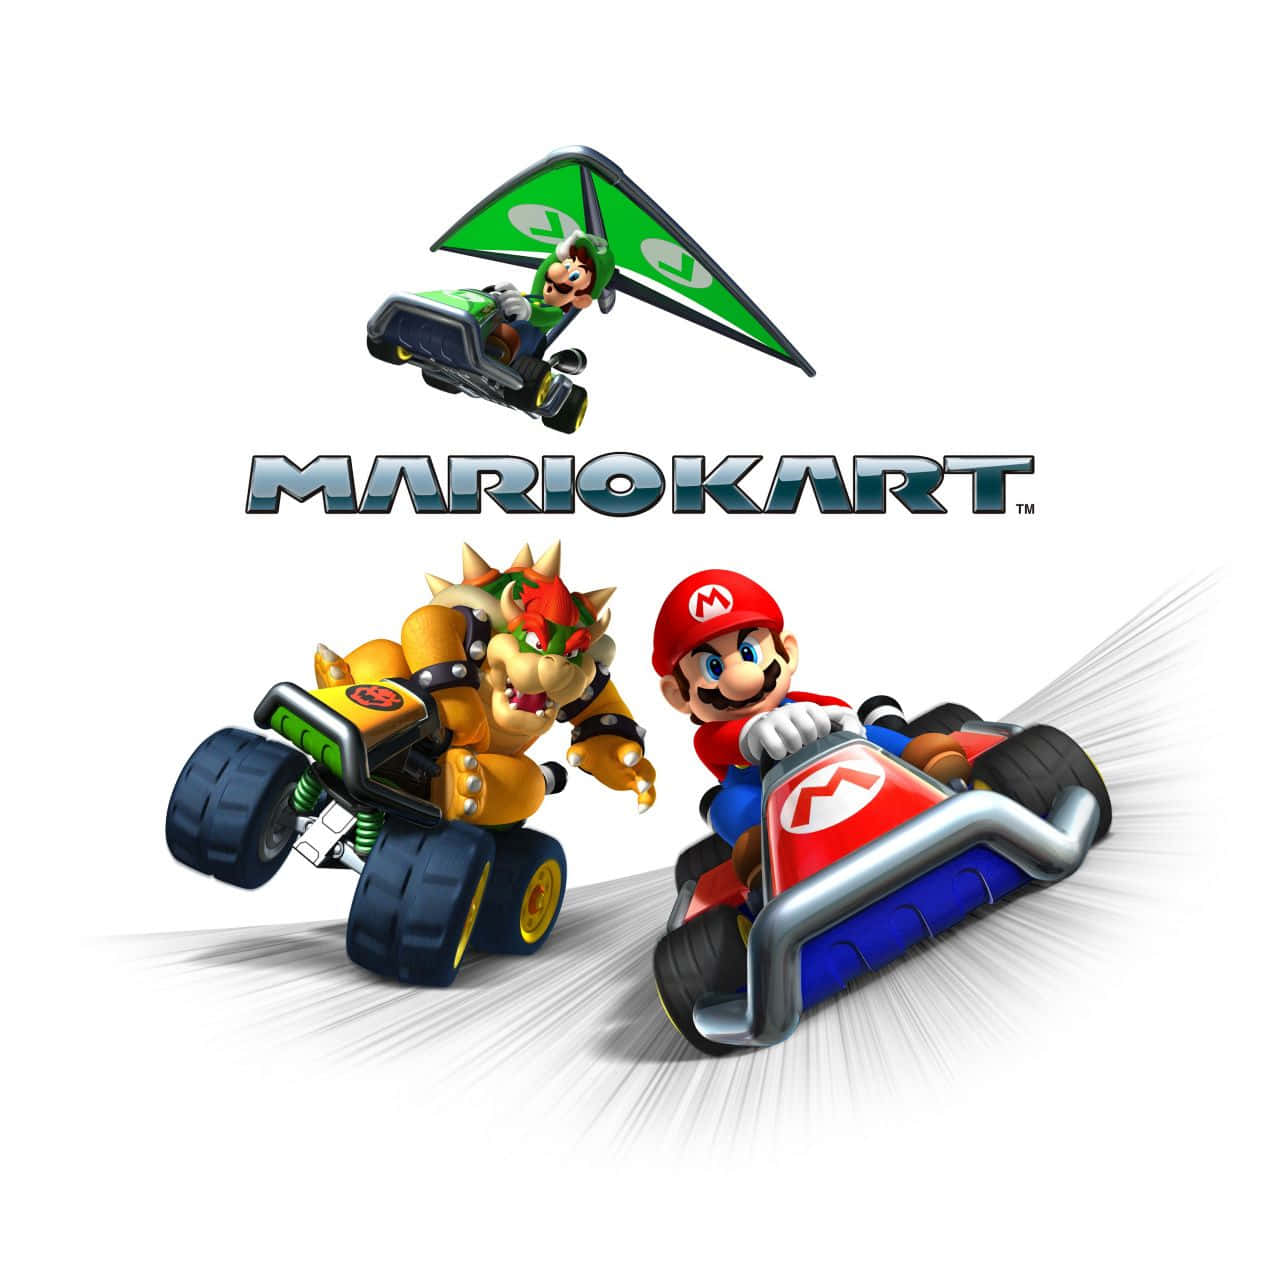 "Speed around Nintendo's circuits with Mario Kart!"